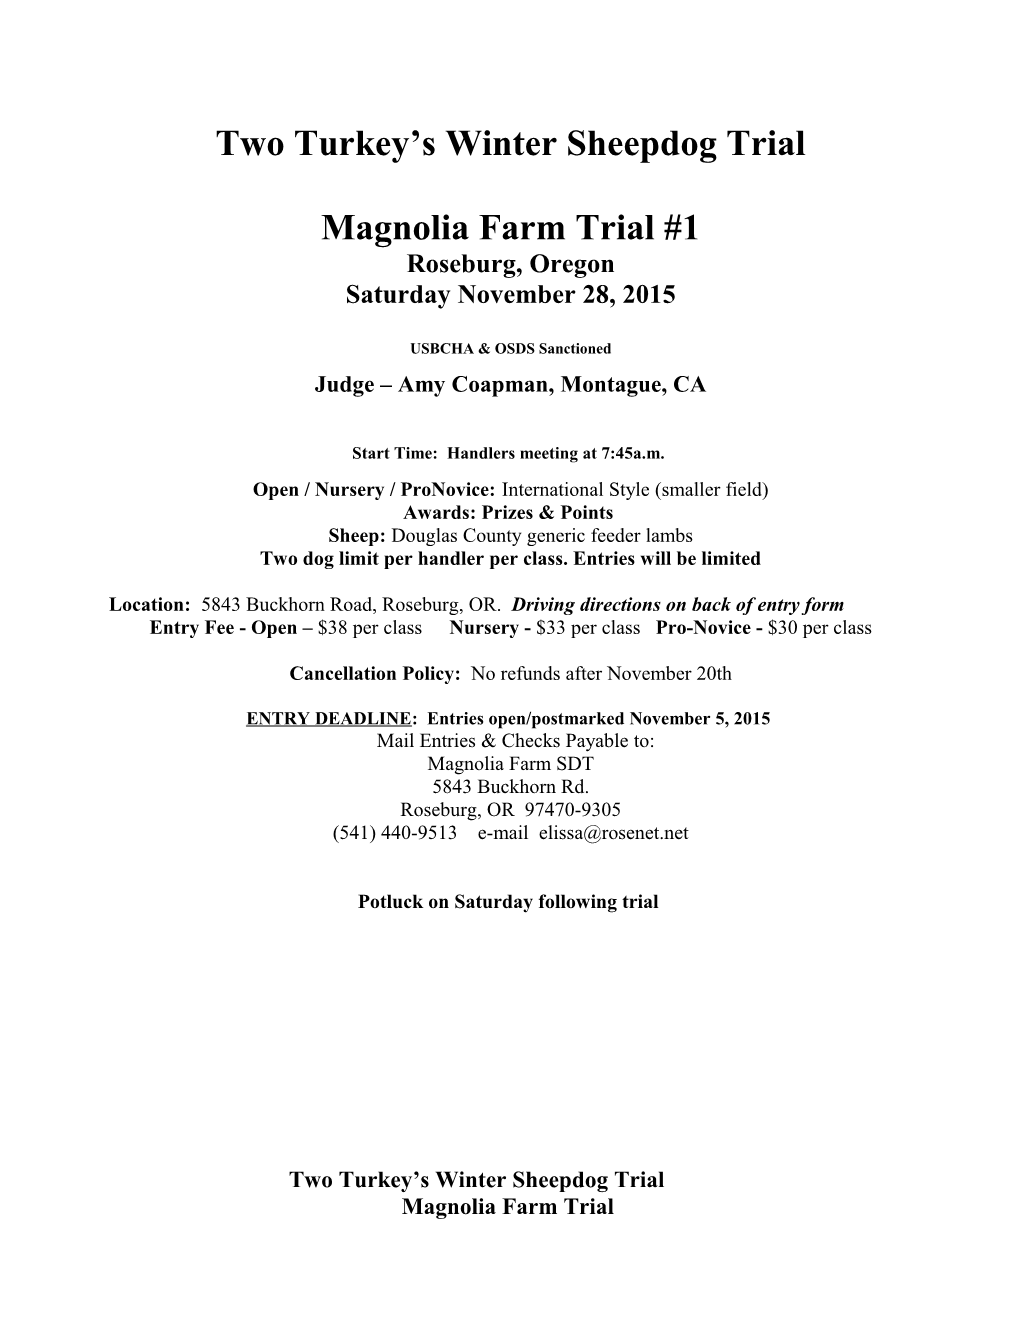 Magnolia Farms Sheep Dog Trial